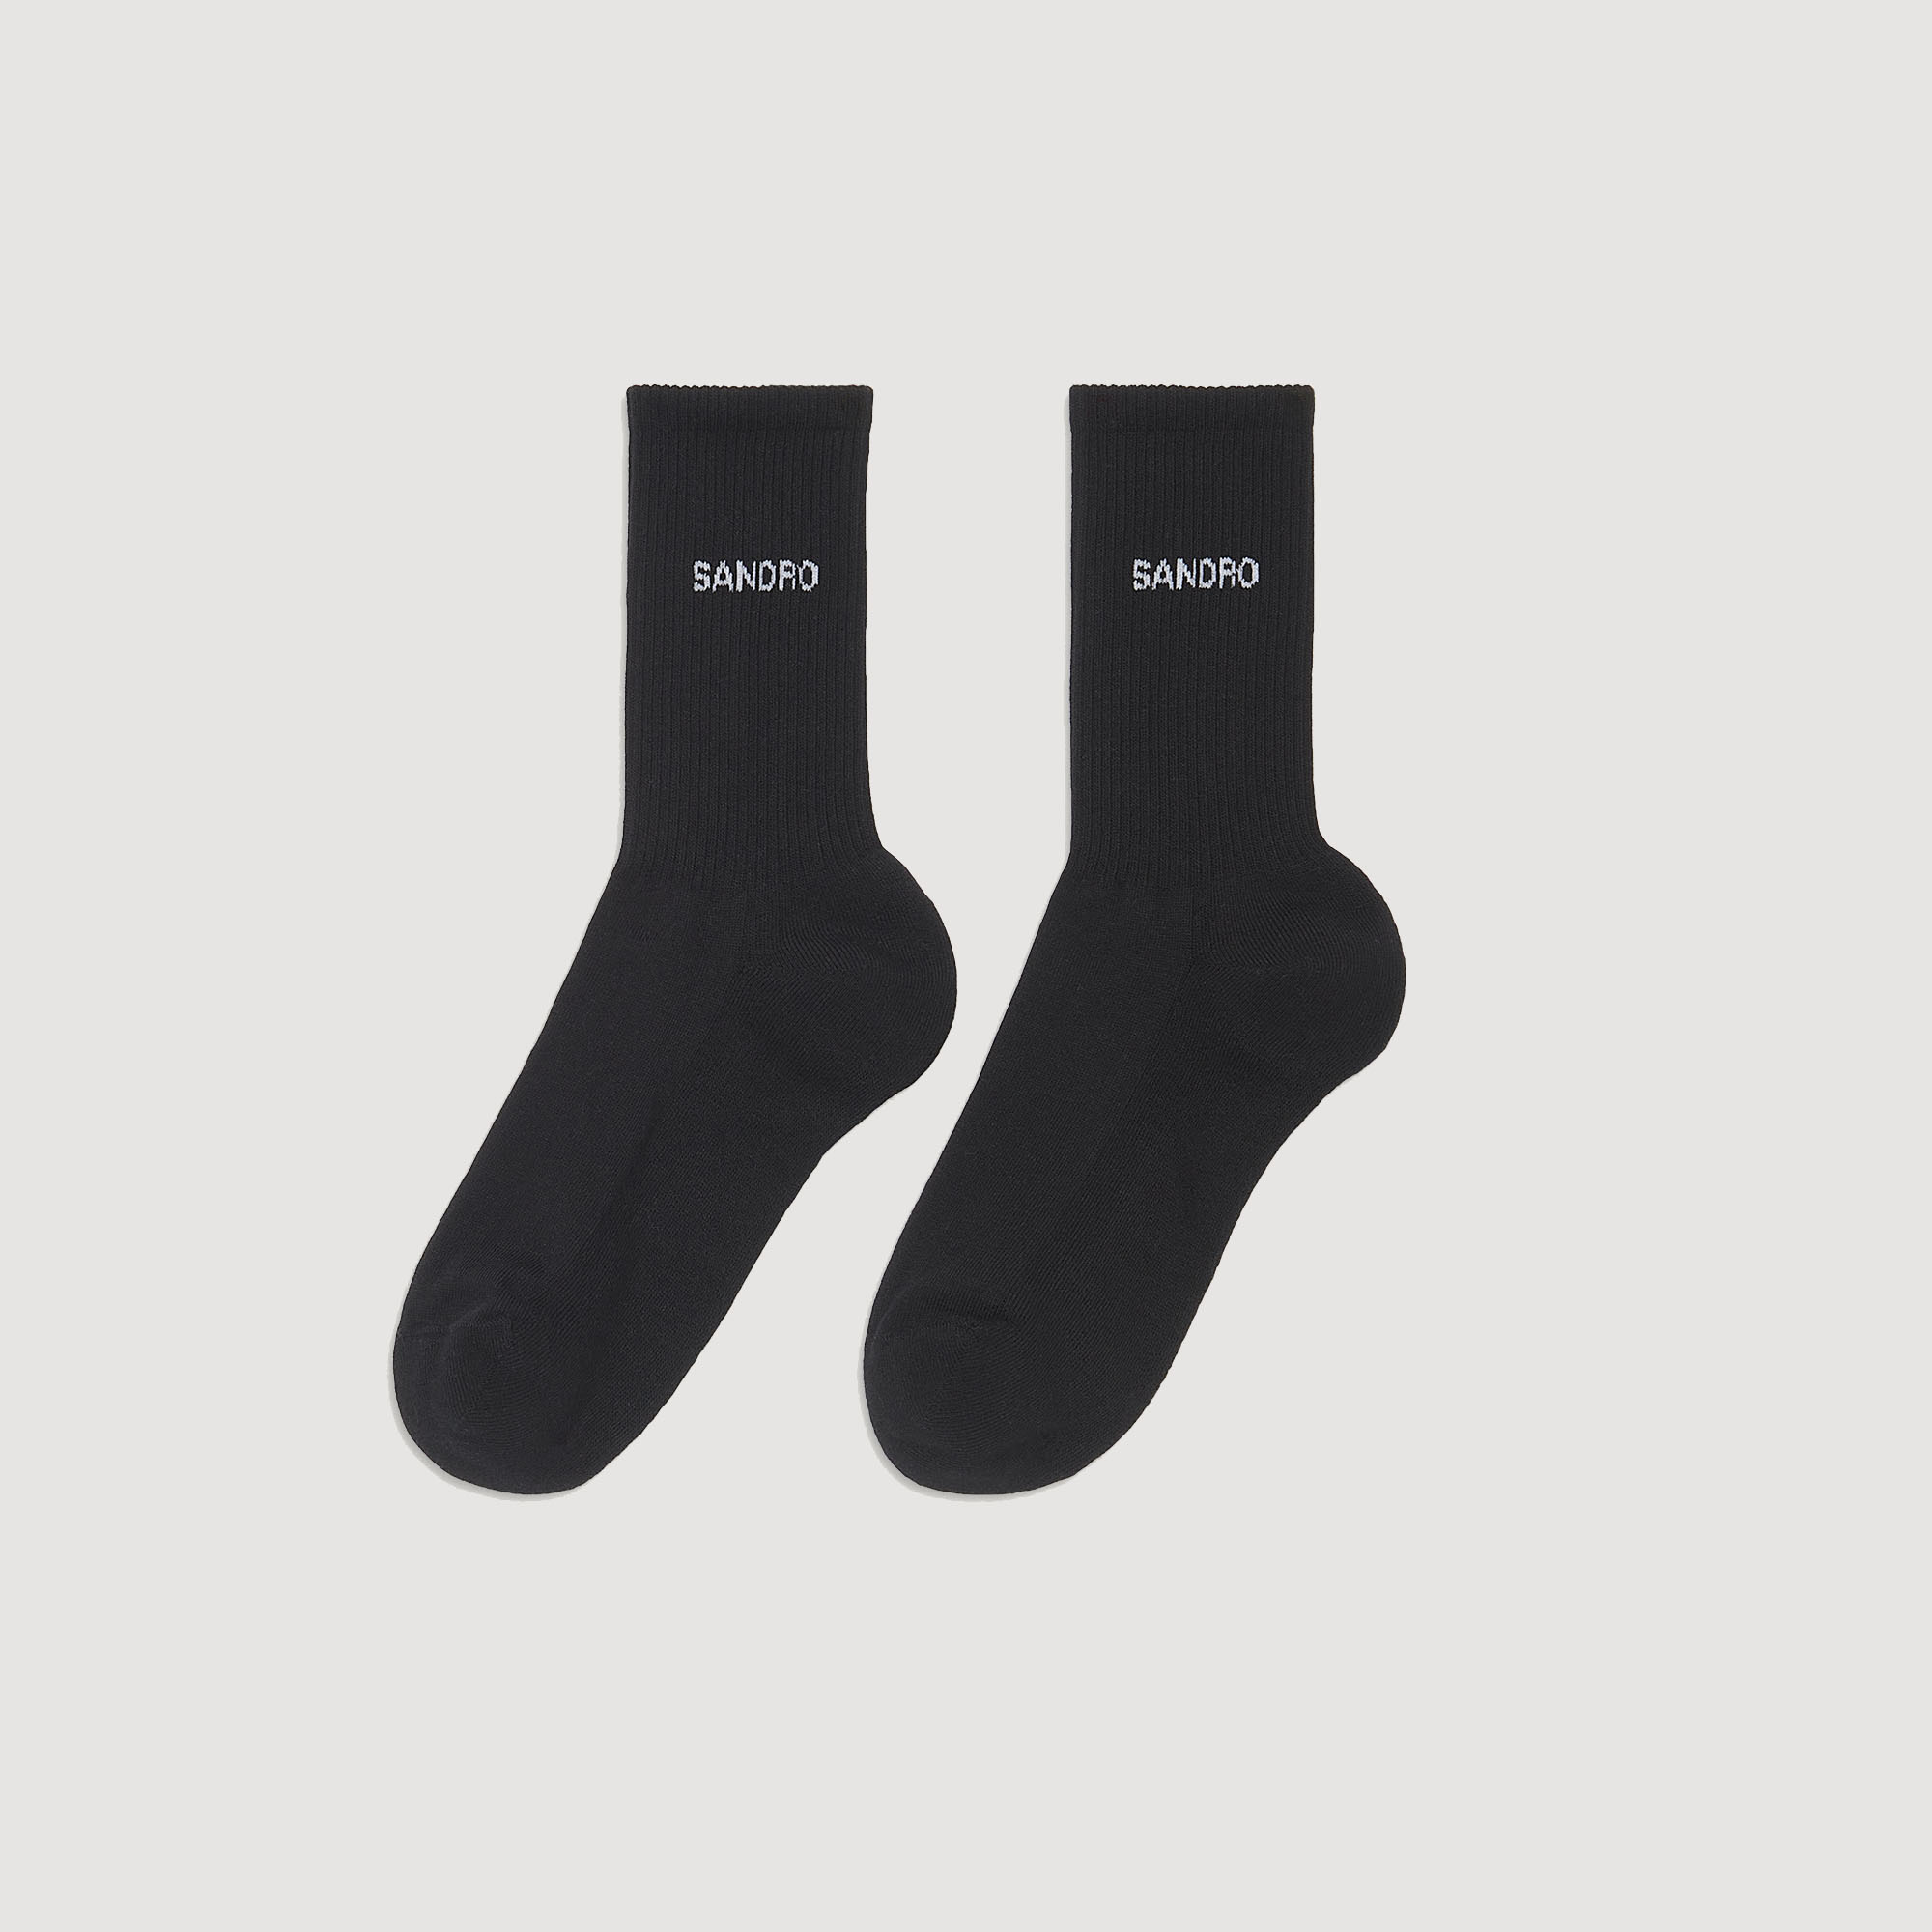 Sandro cotton Sandro men's socks â€¢ Cotton socks â€¢ Jacquard Sandro logo